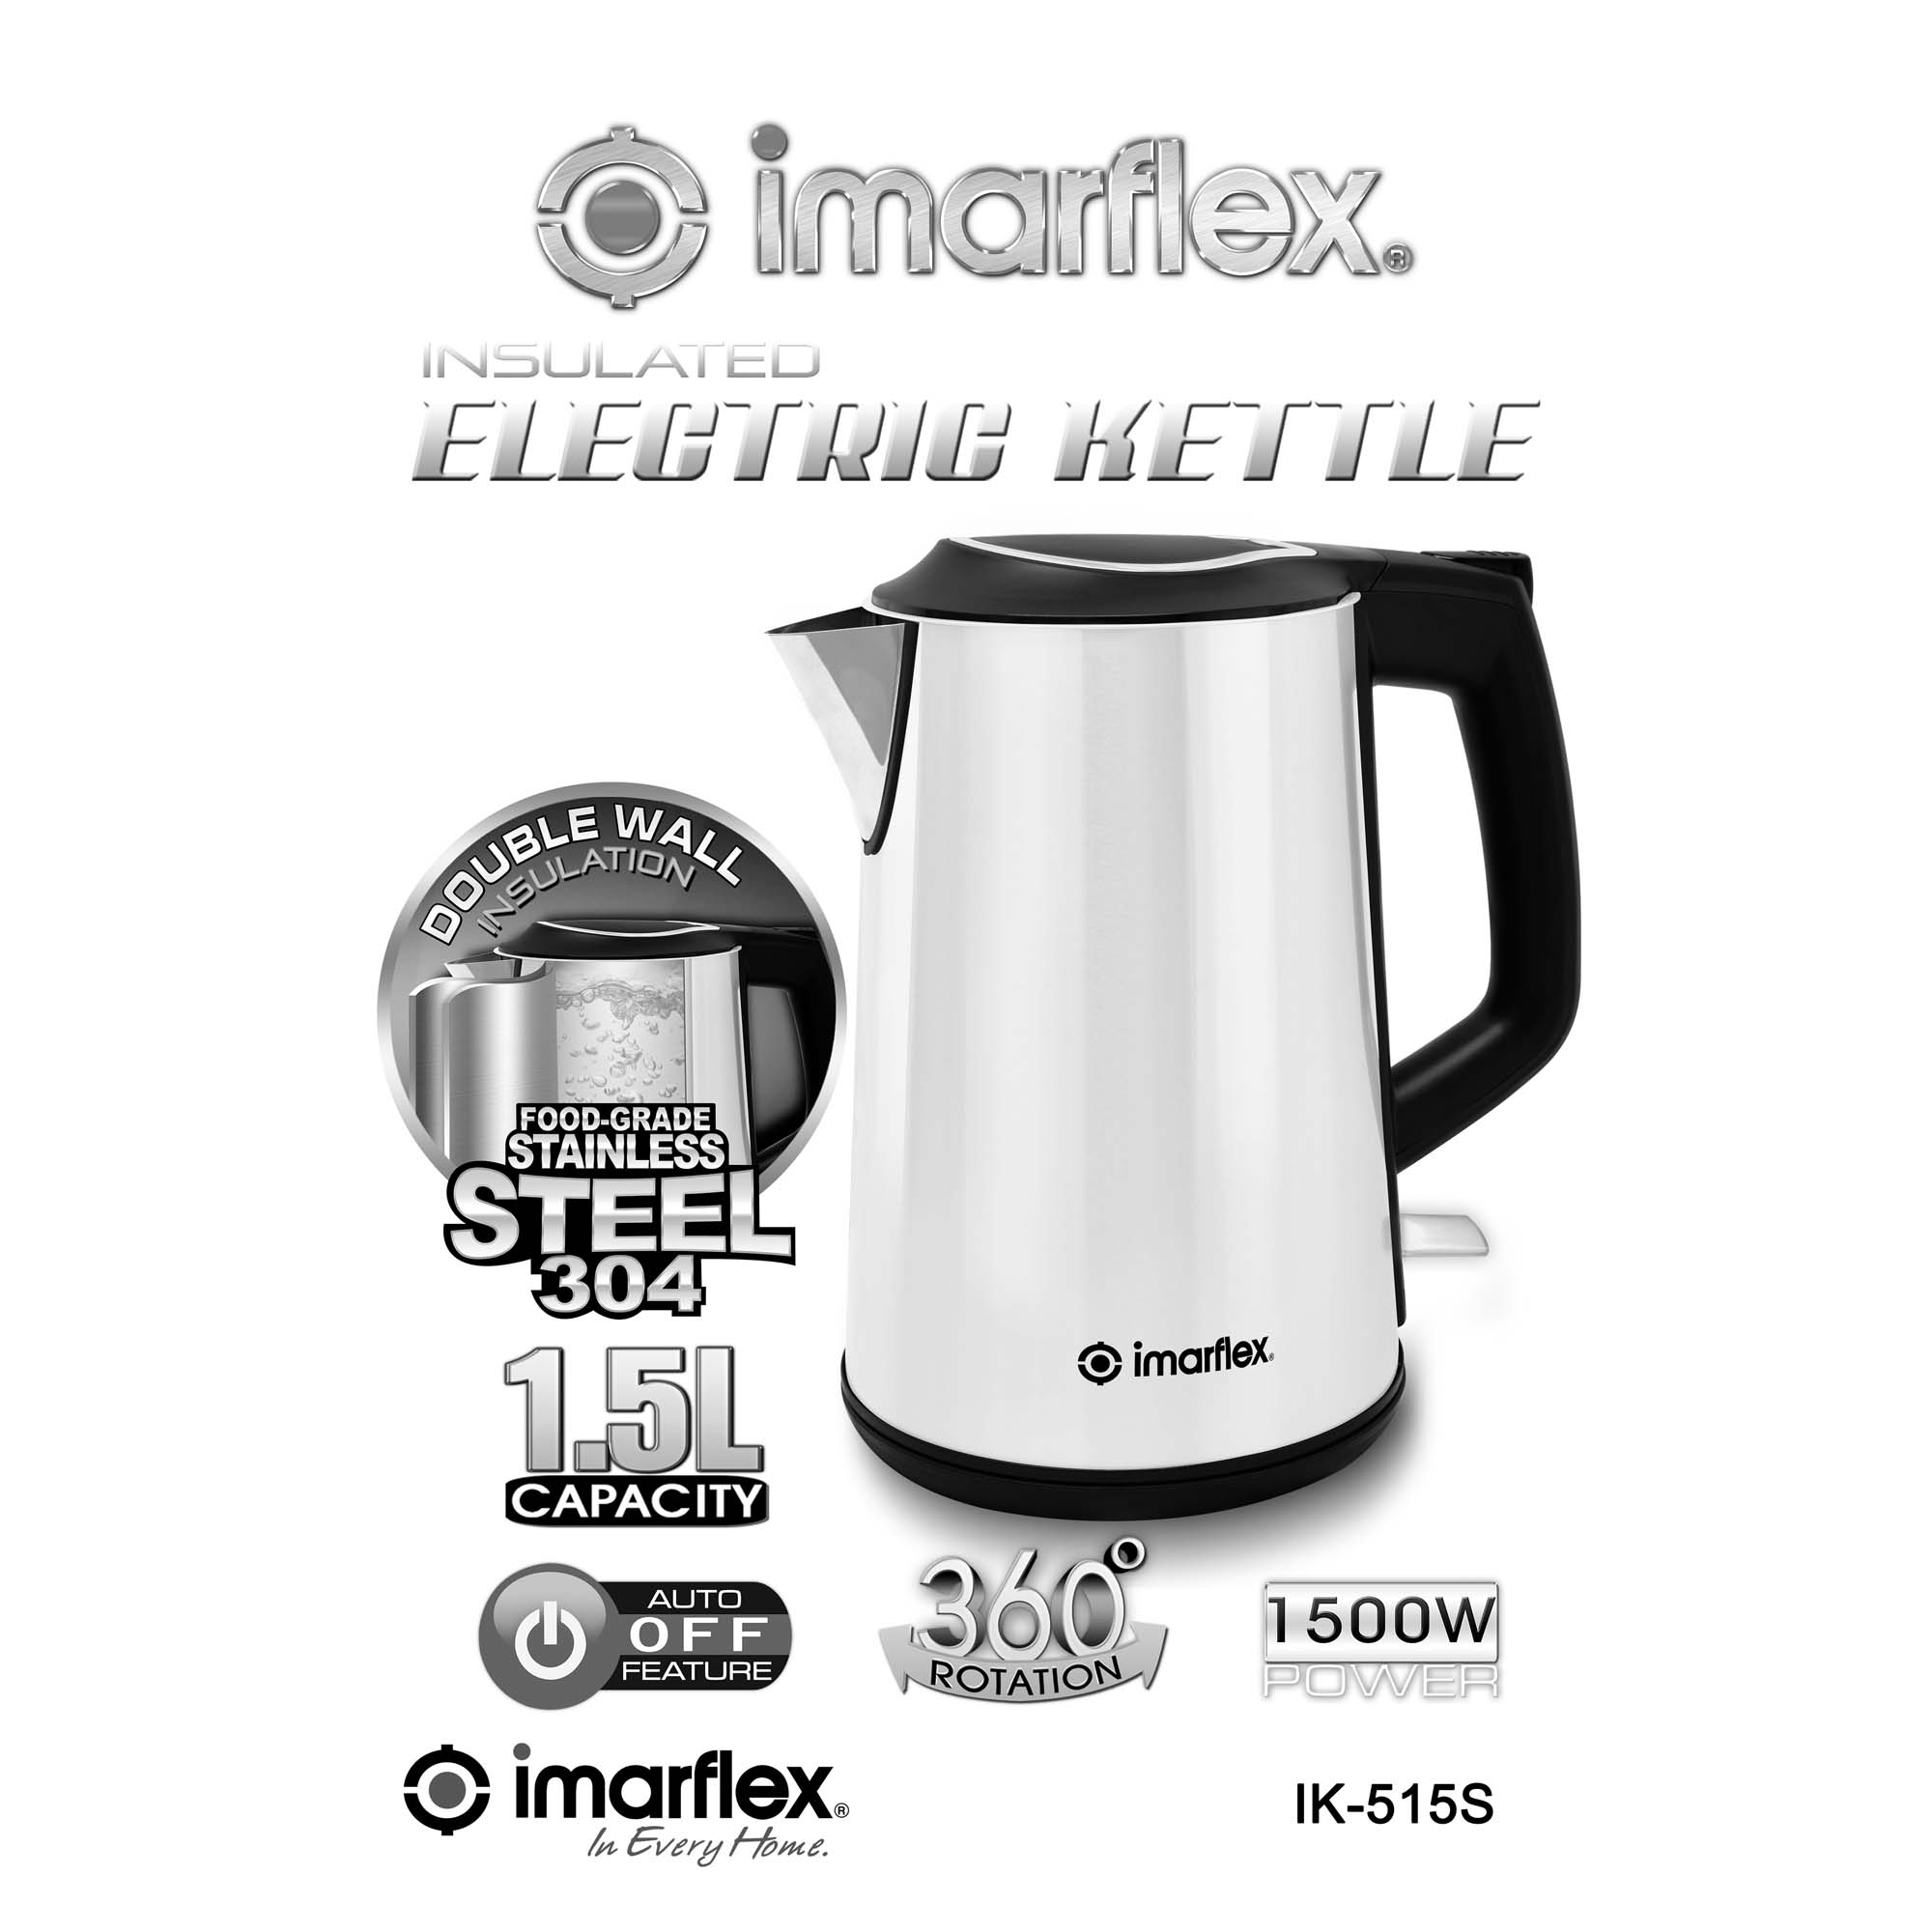 Imarflex Insulated Electric kettle IK 